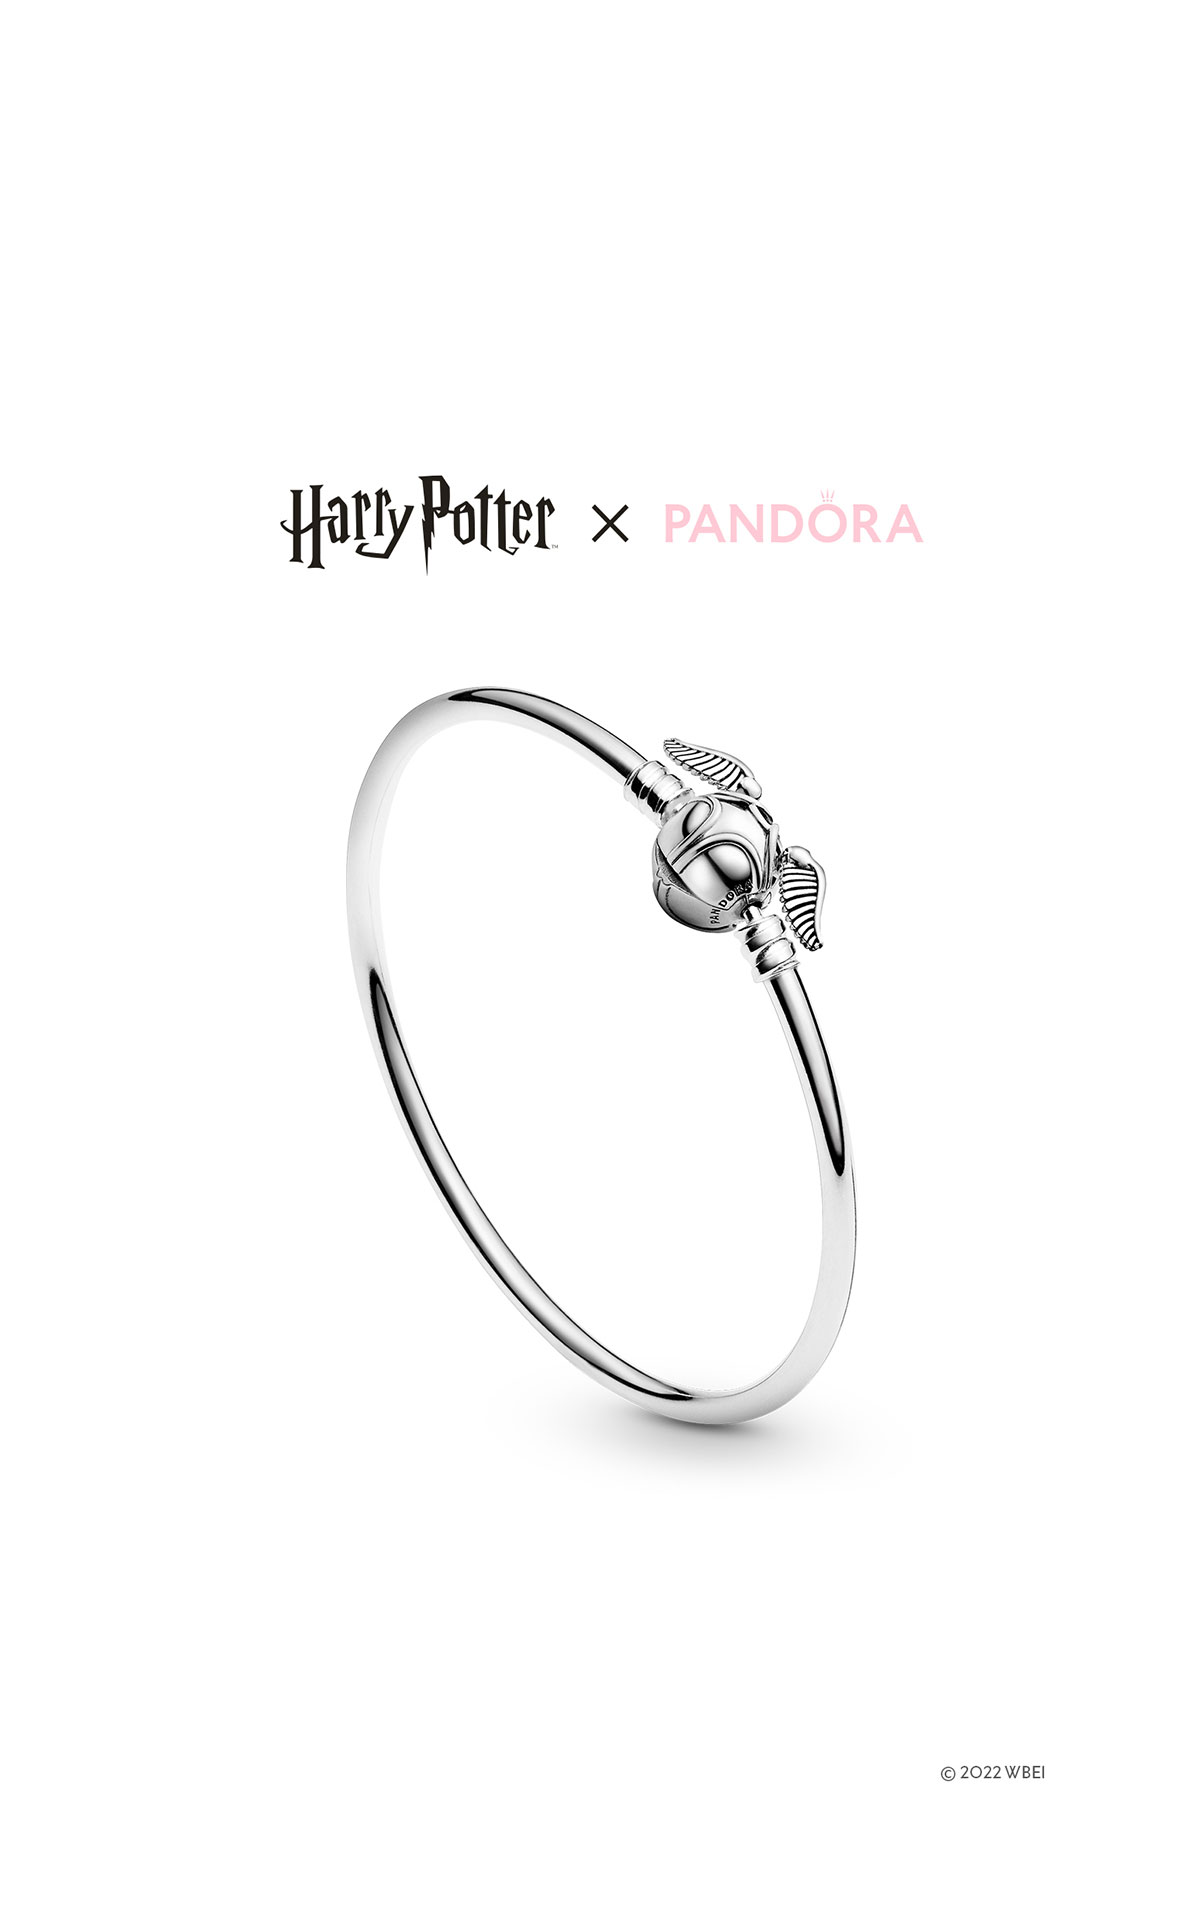 Pandora Harry Potter snitch bangle from Bicester Village